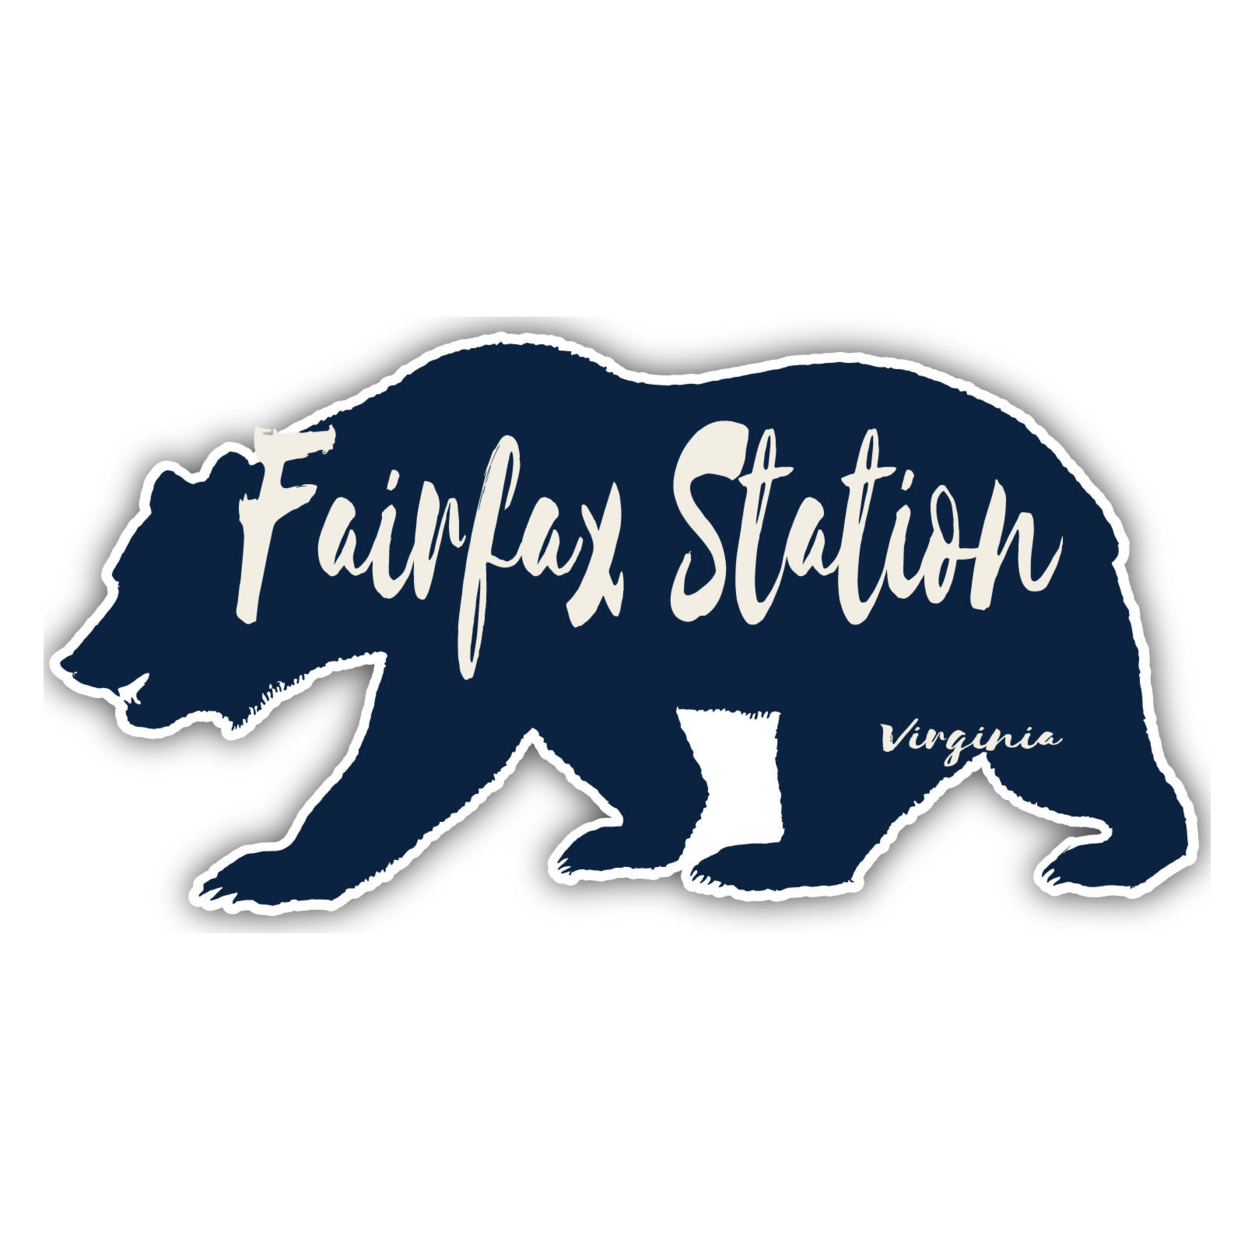 Fairfax Station Virginia Souvenir Decorative Stickers (Choose Theme And Size) - Single Unit, 8-Inch, Bear